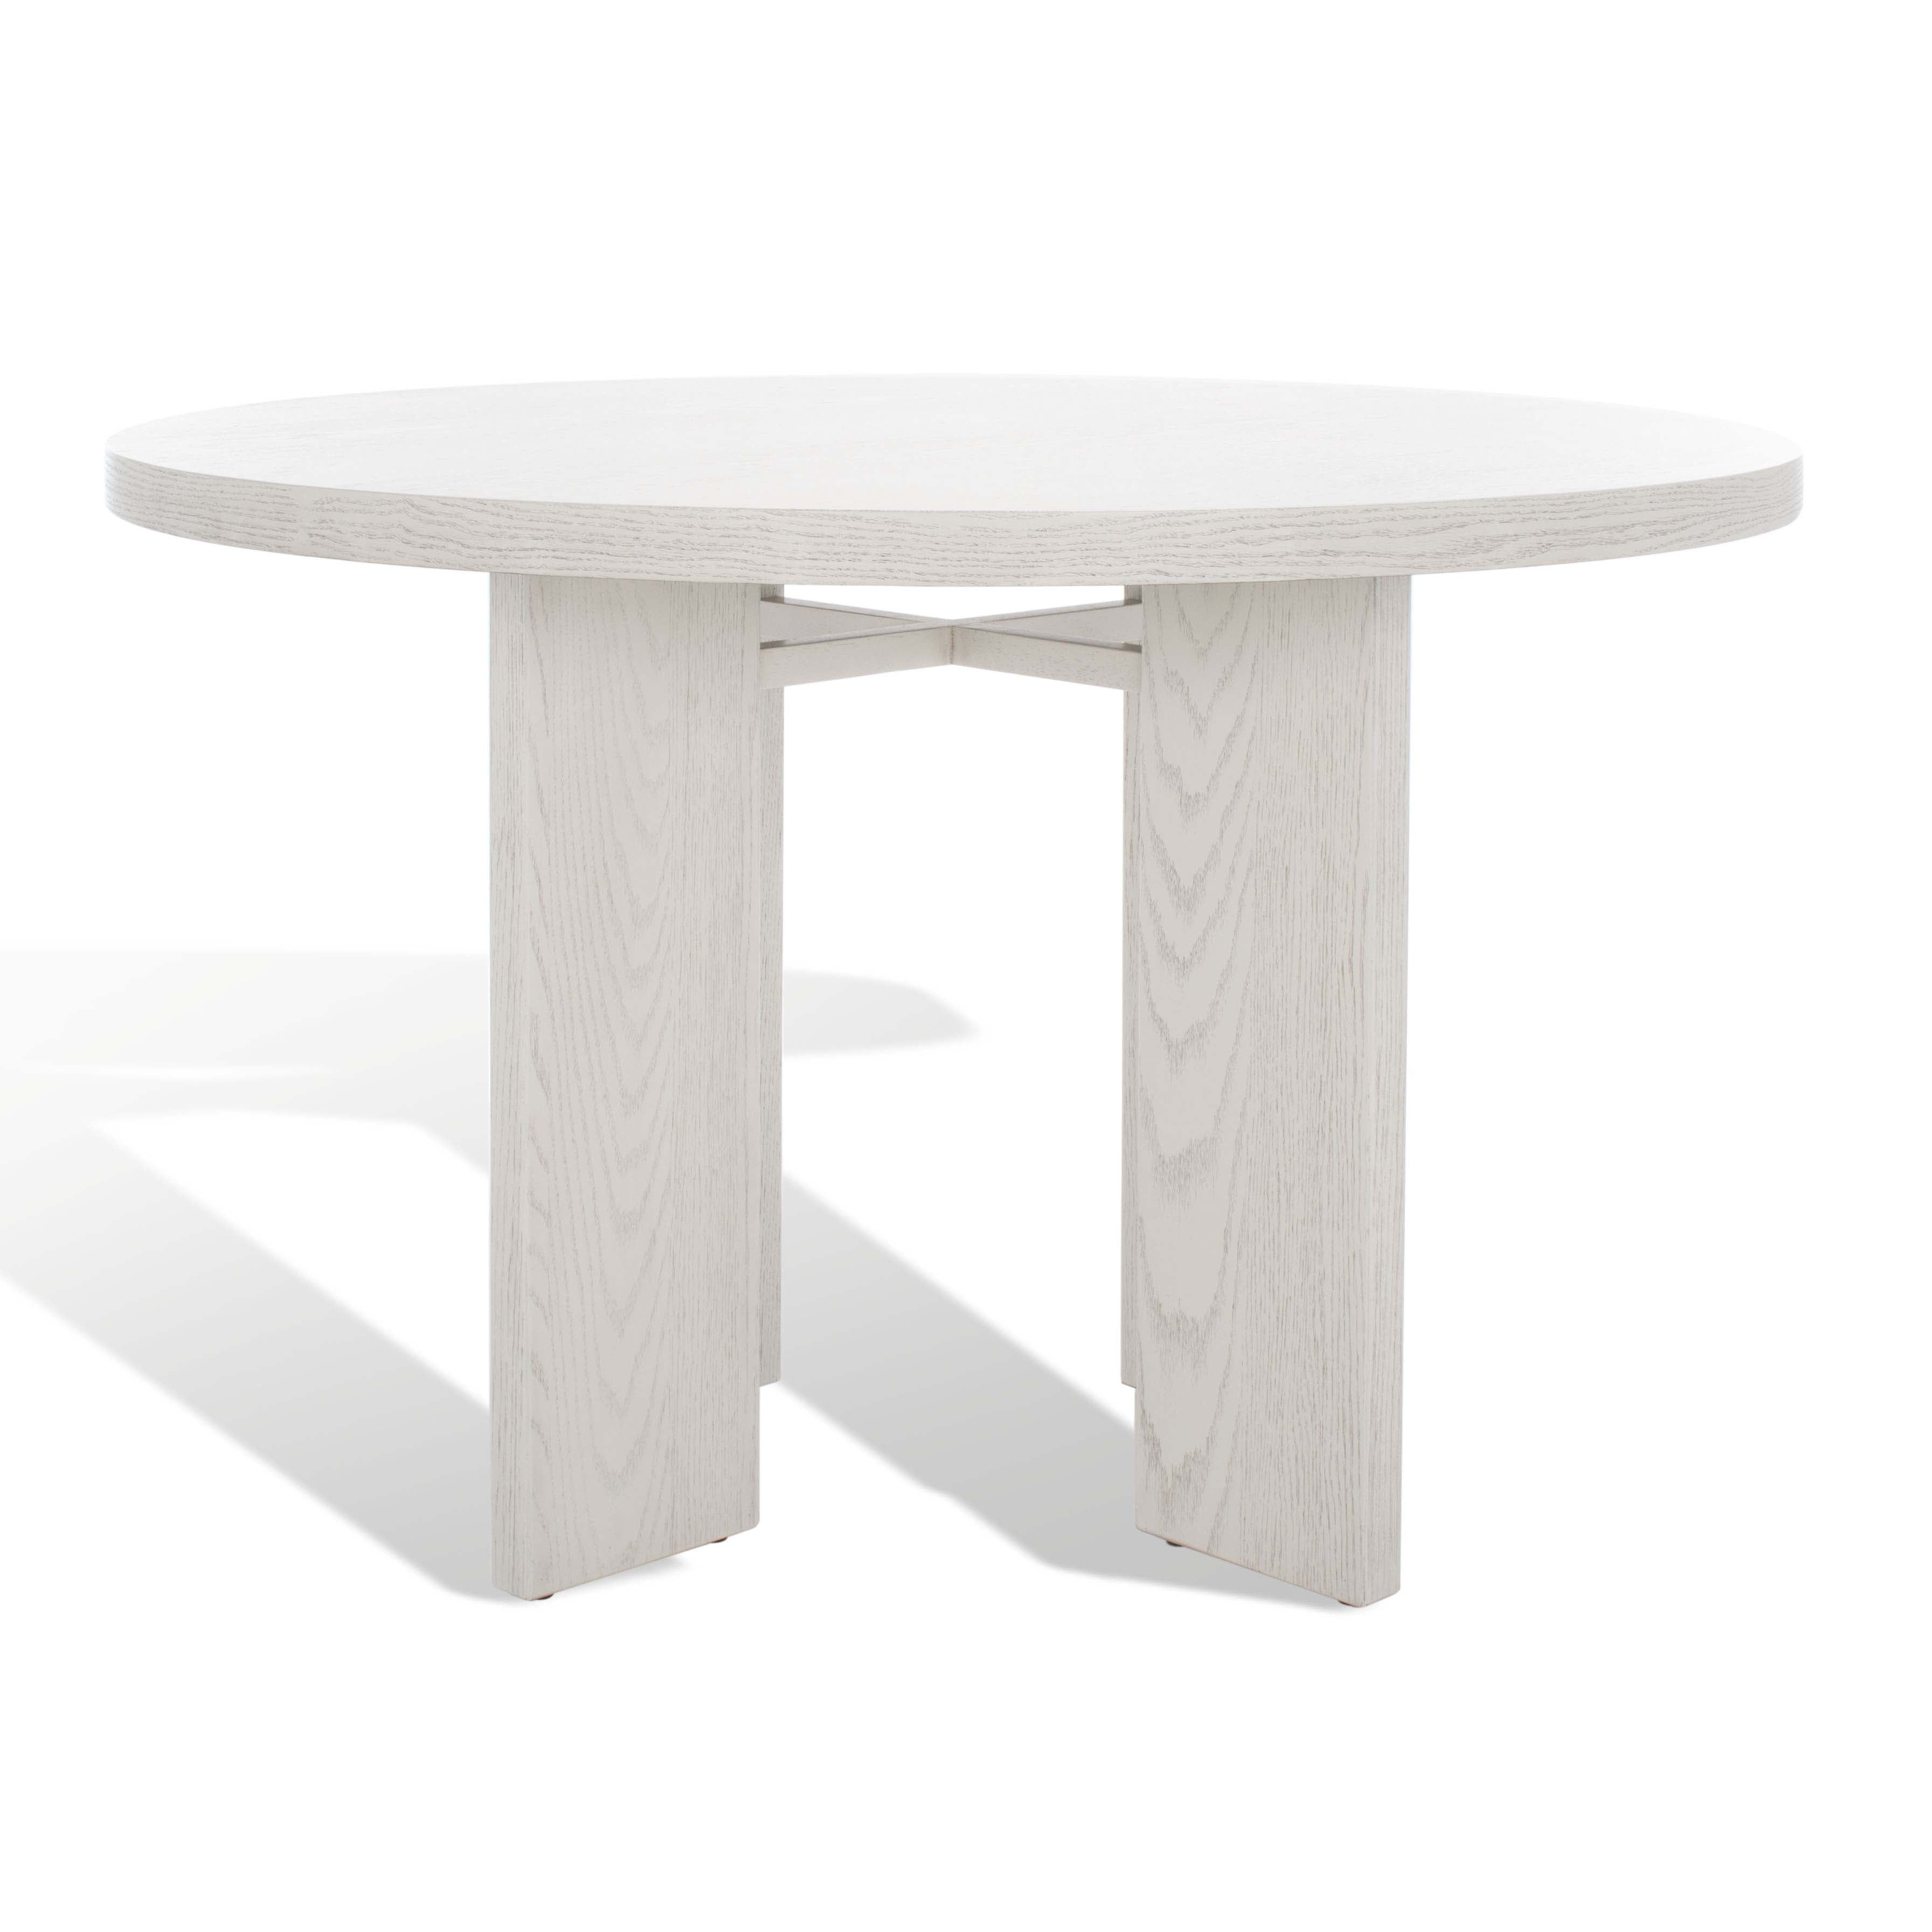 Safavieh Couture Calamaria Round Wood Dining Table